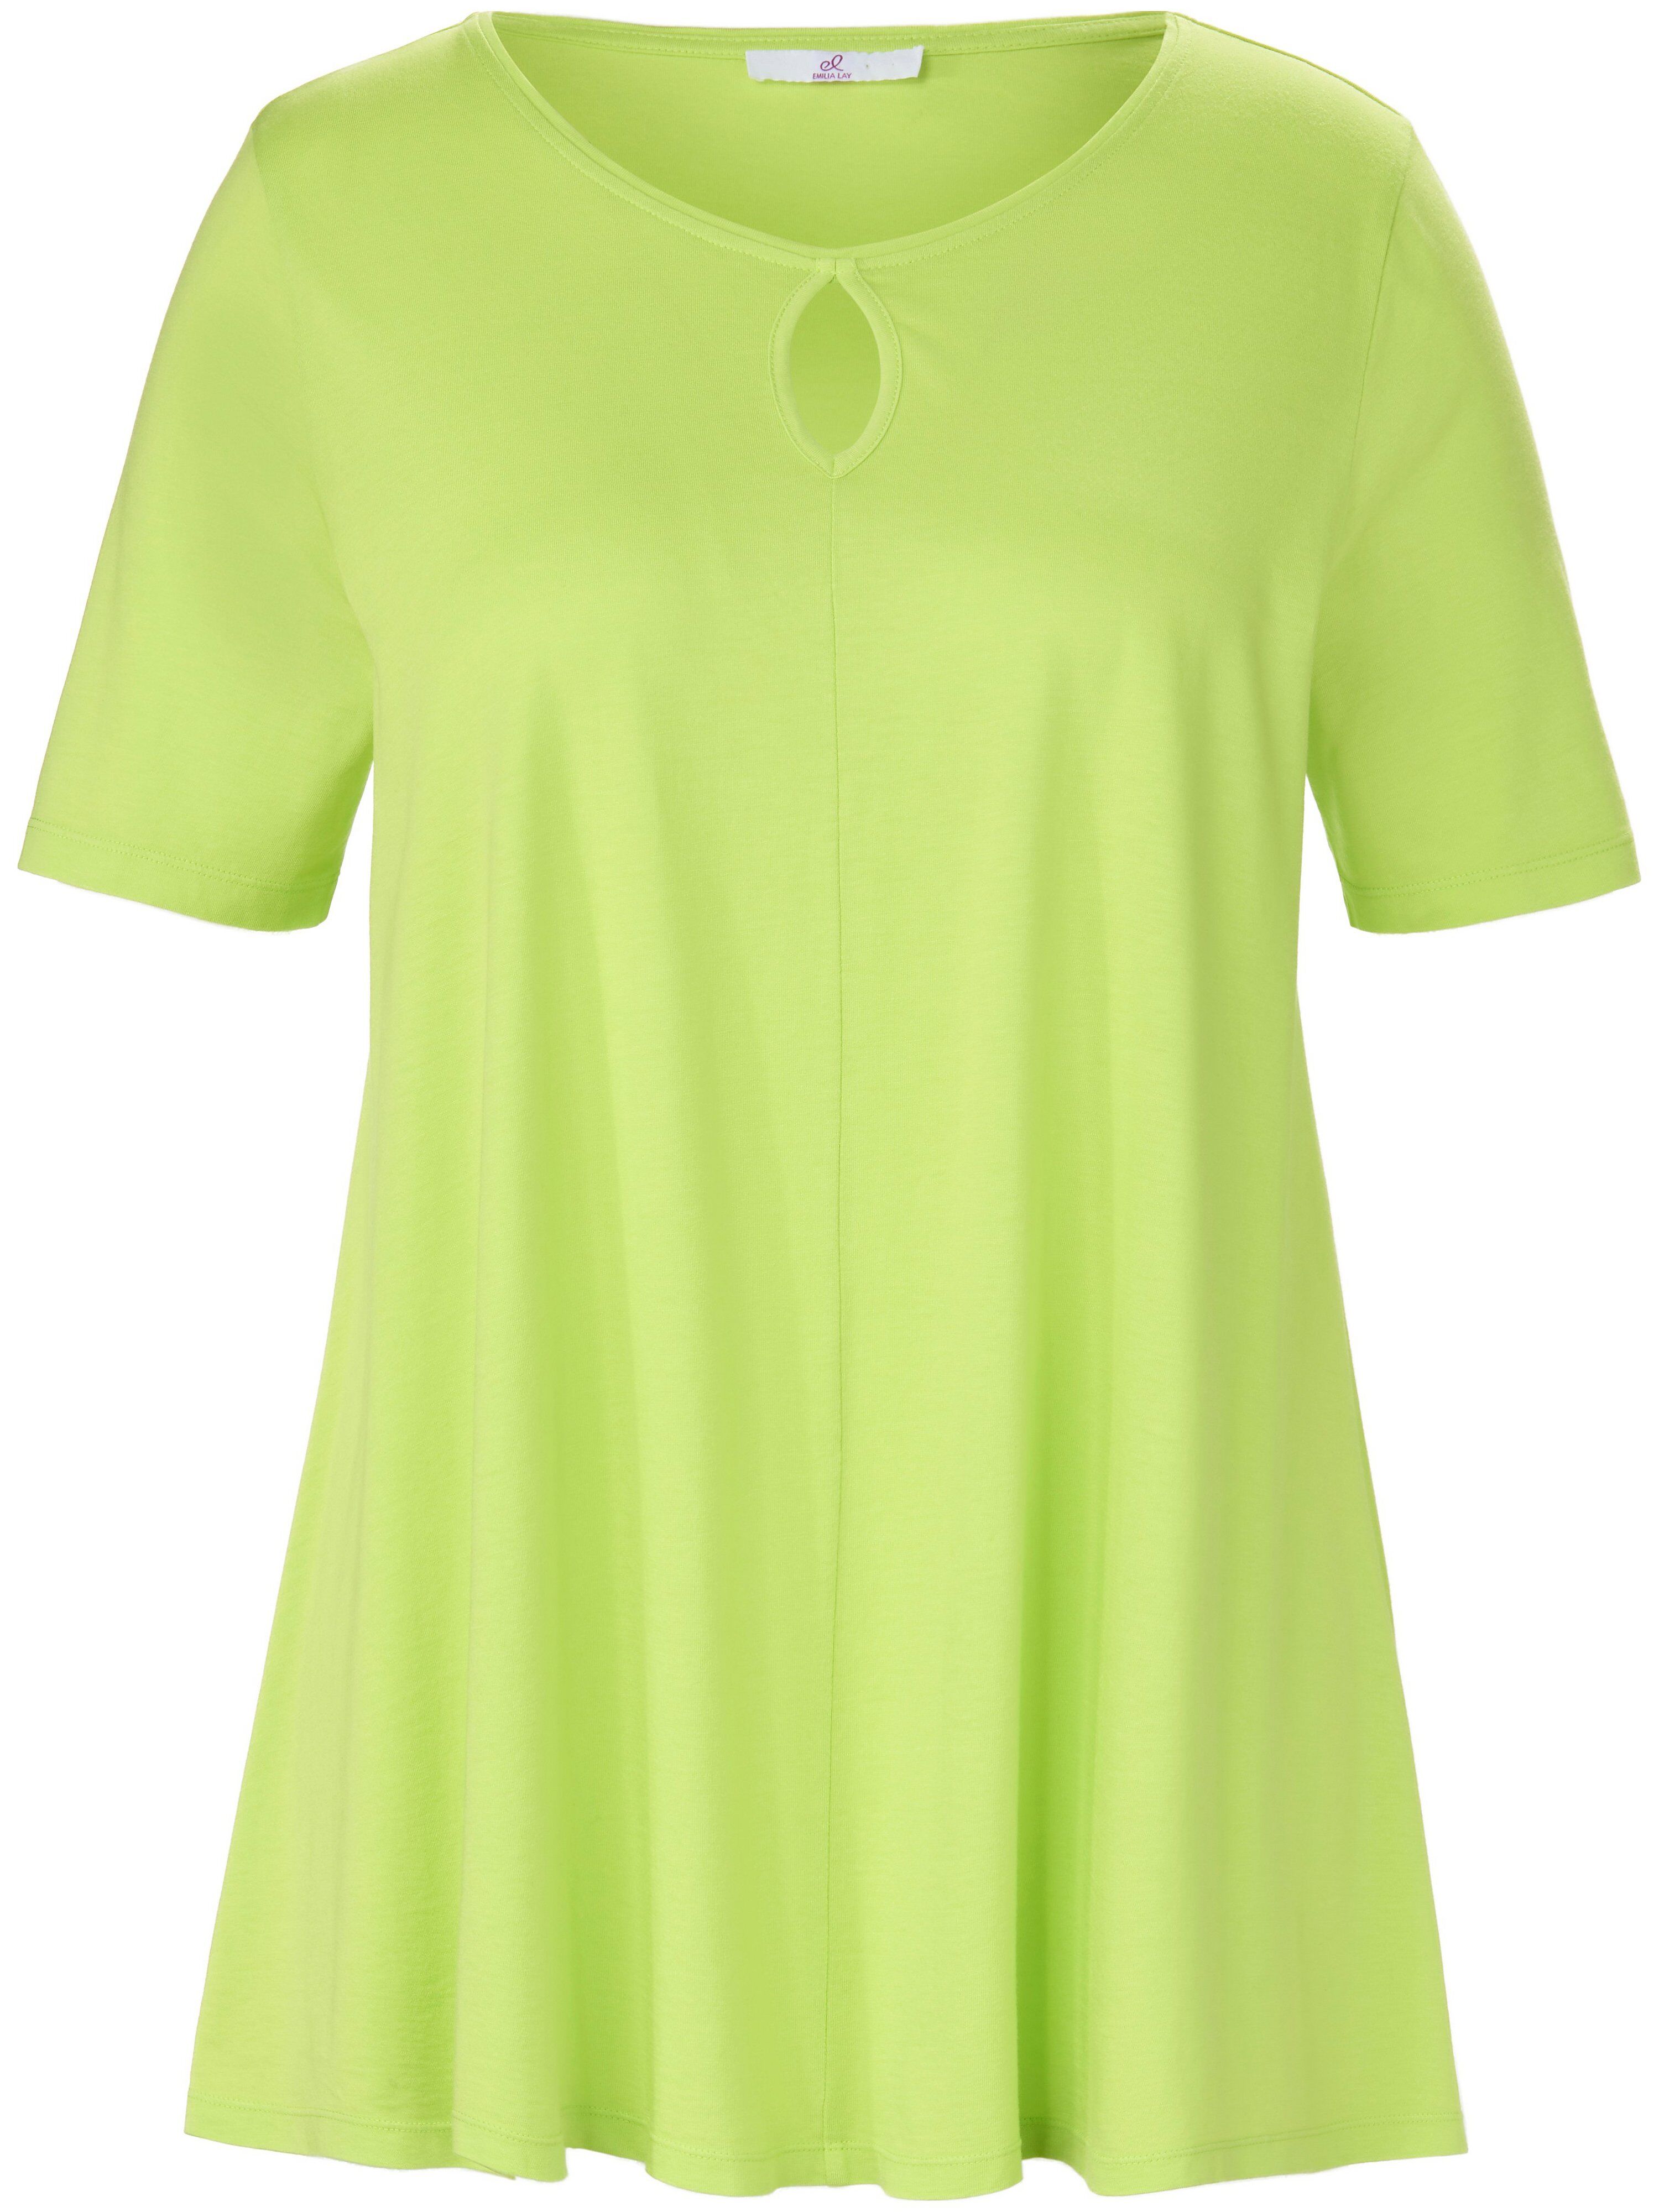 Emilia Lay Le T-shirt en jersey  Emilia Lay vert  - Femme - 42